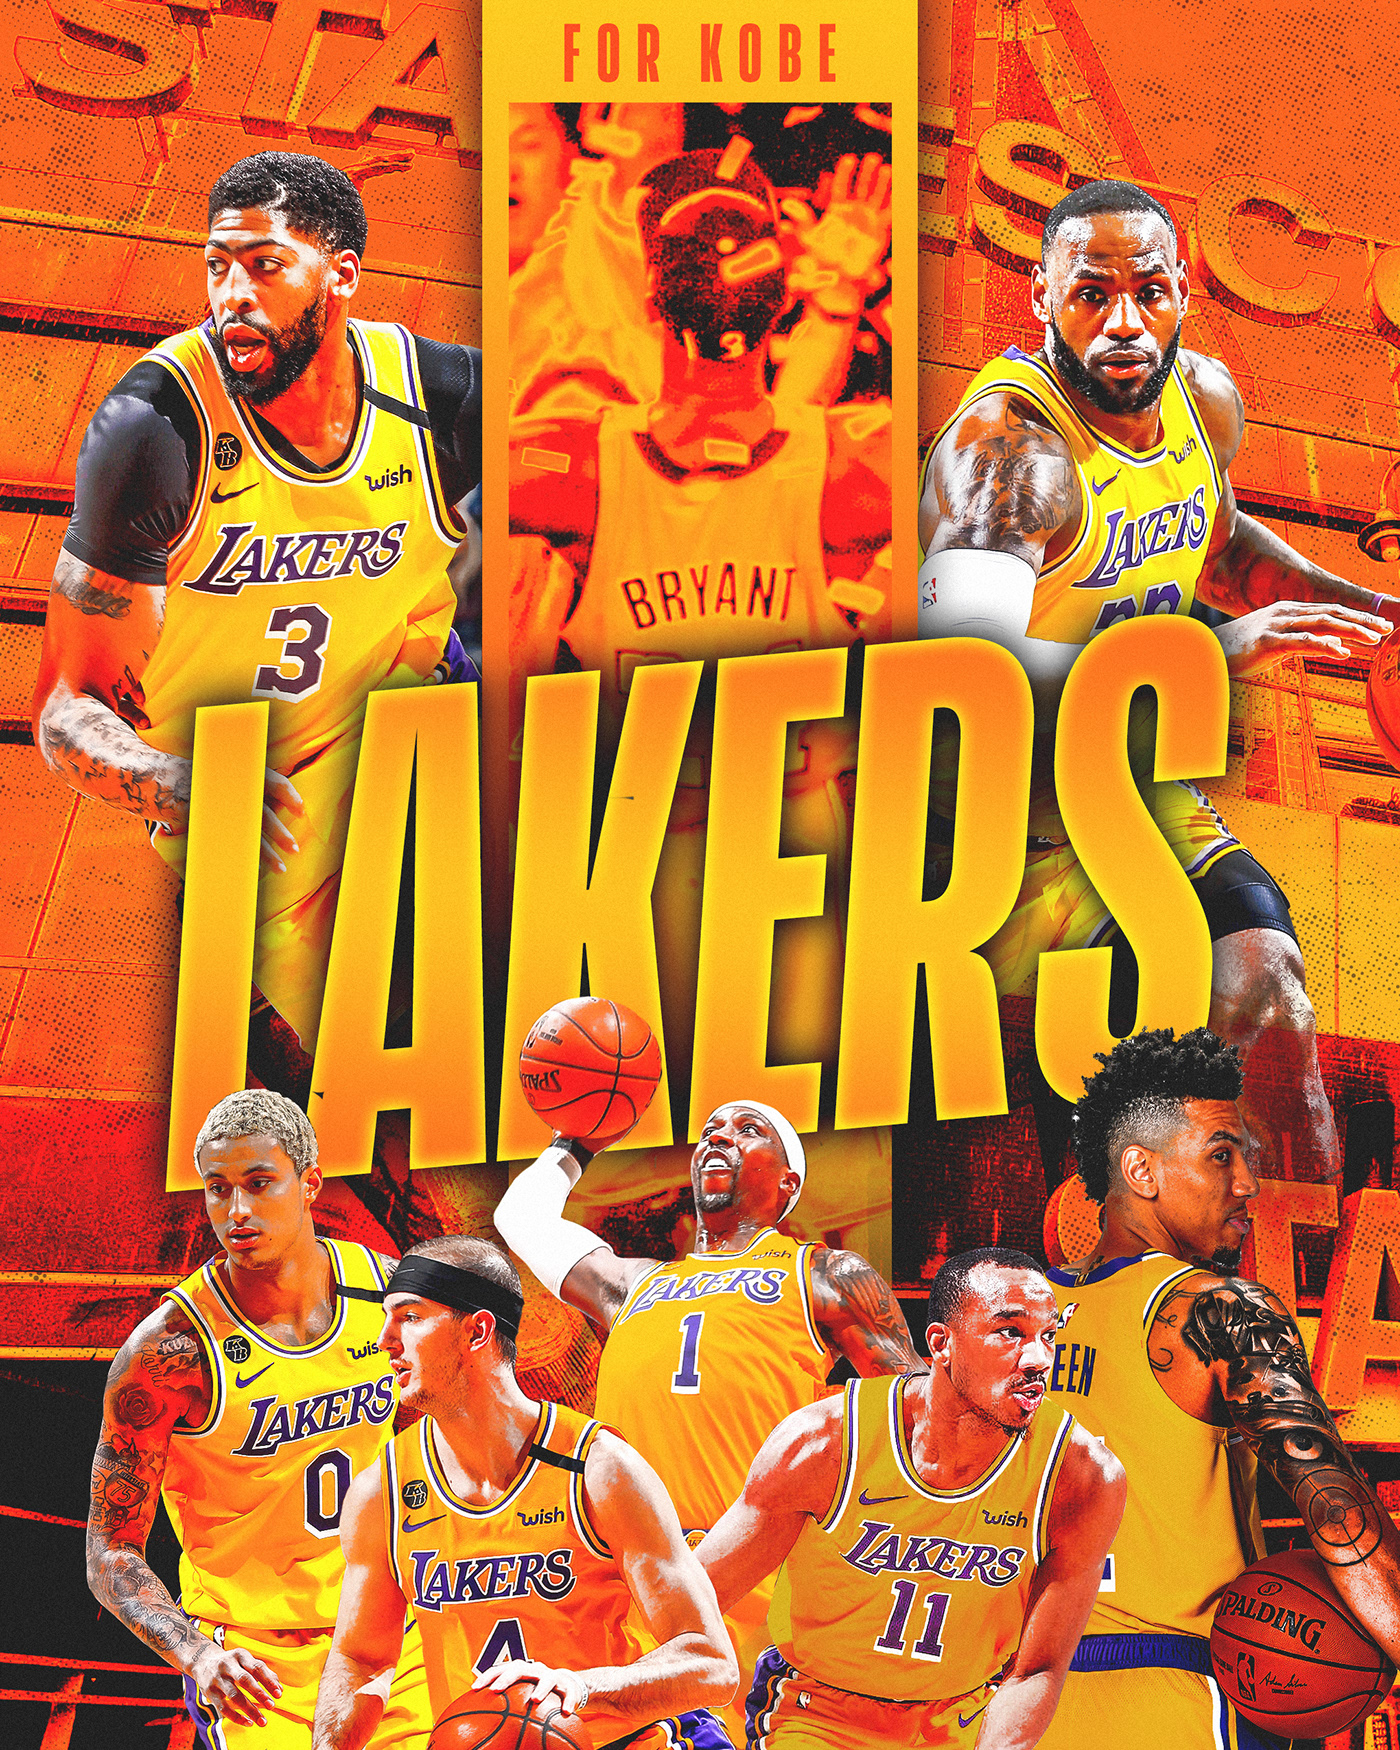 #ballislife #forkobe #graphicDesign #Kobe #Lakers #NBA